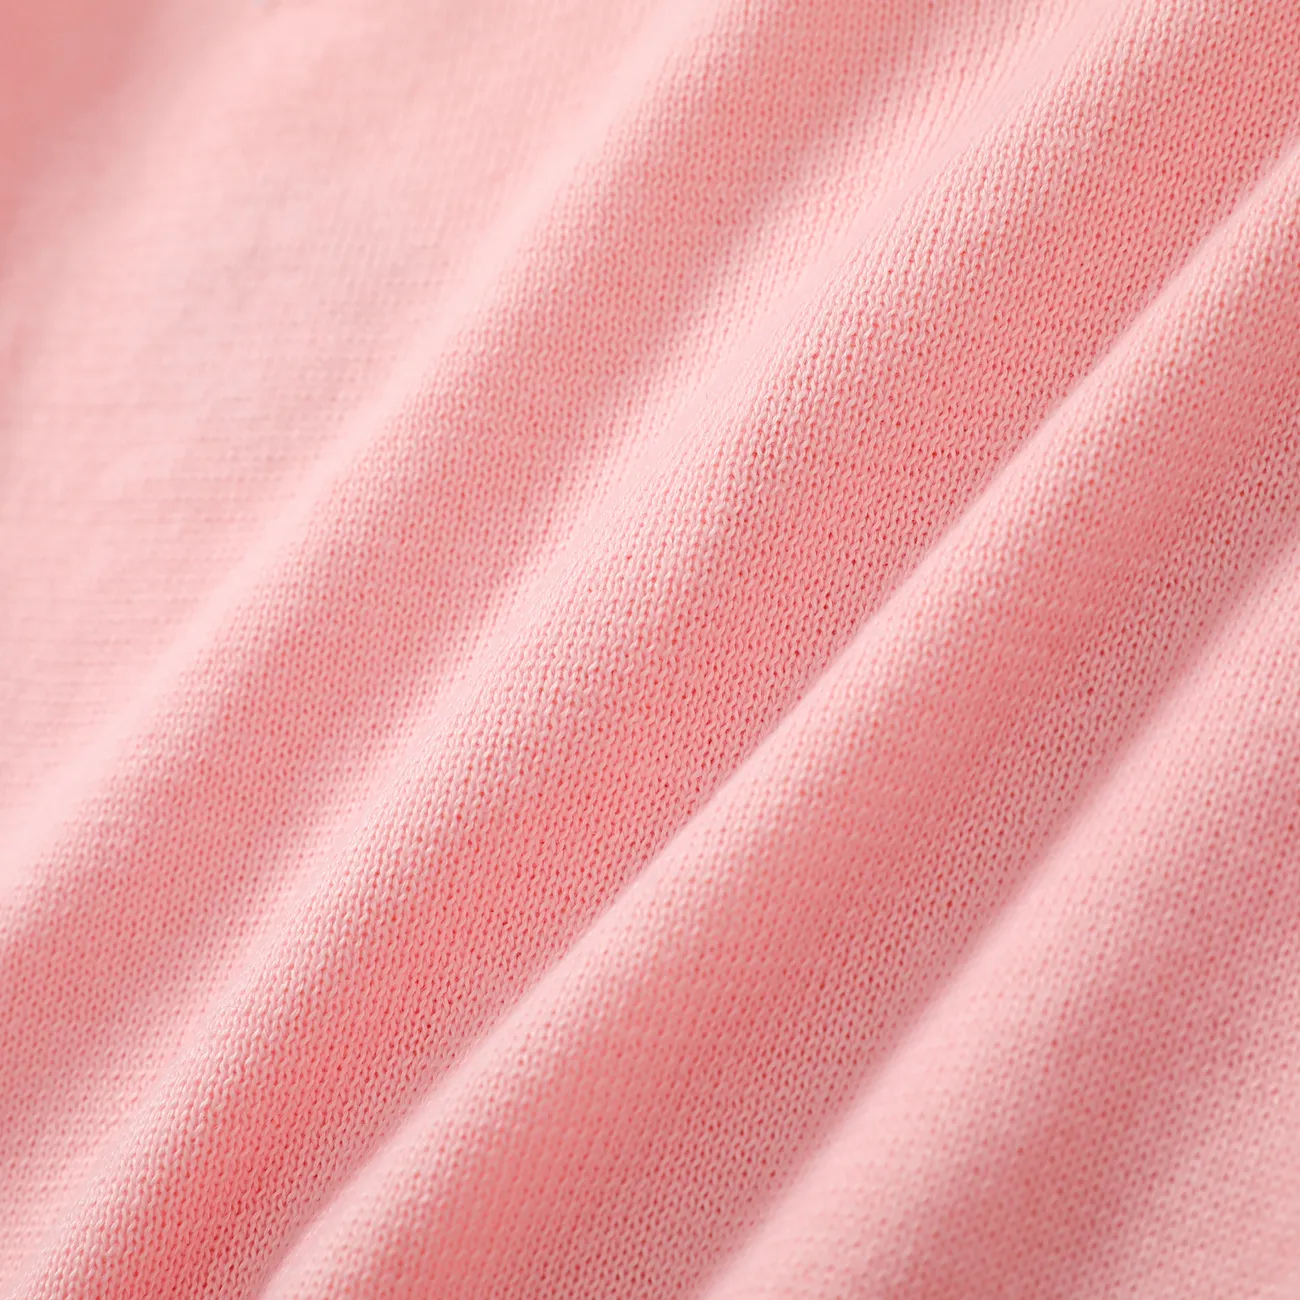 Kleinkinder Mädchen Knöpfe Basics Pullover rosa big image 1